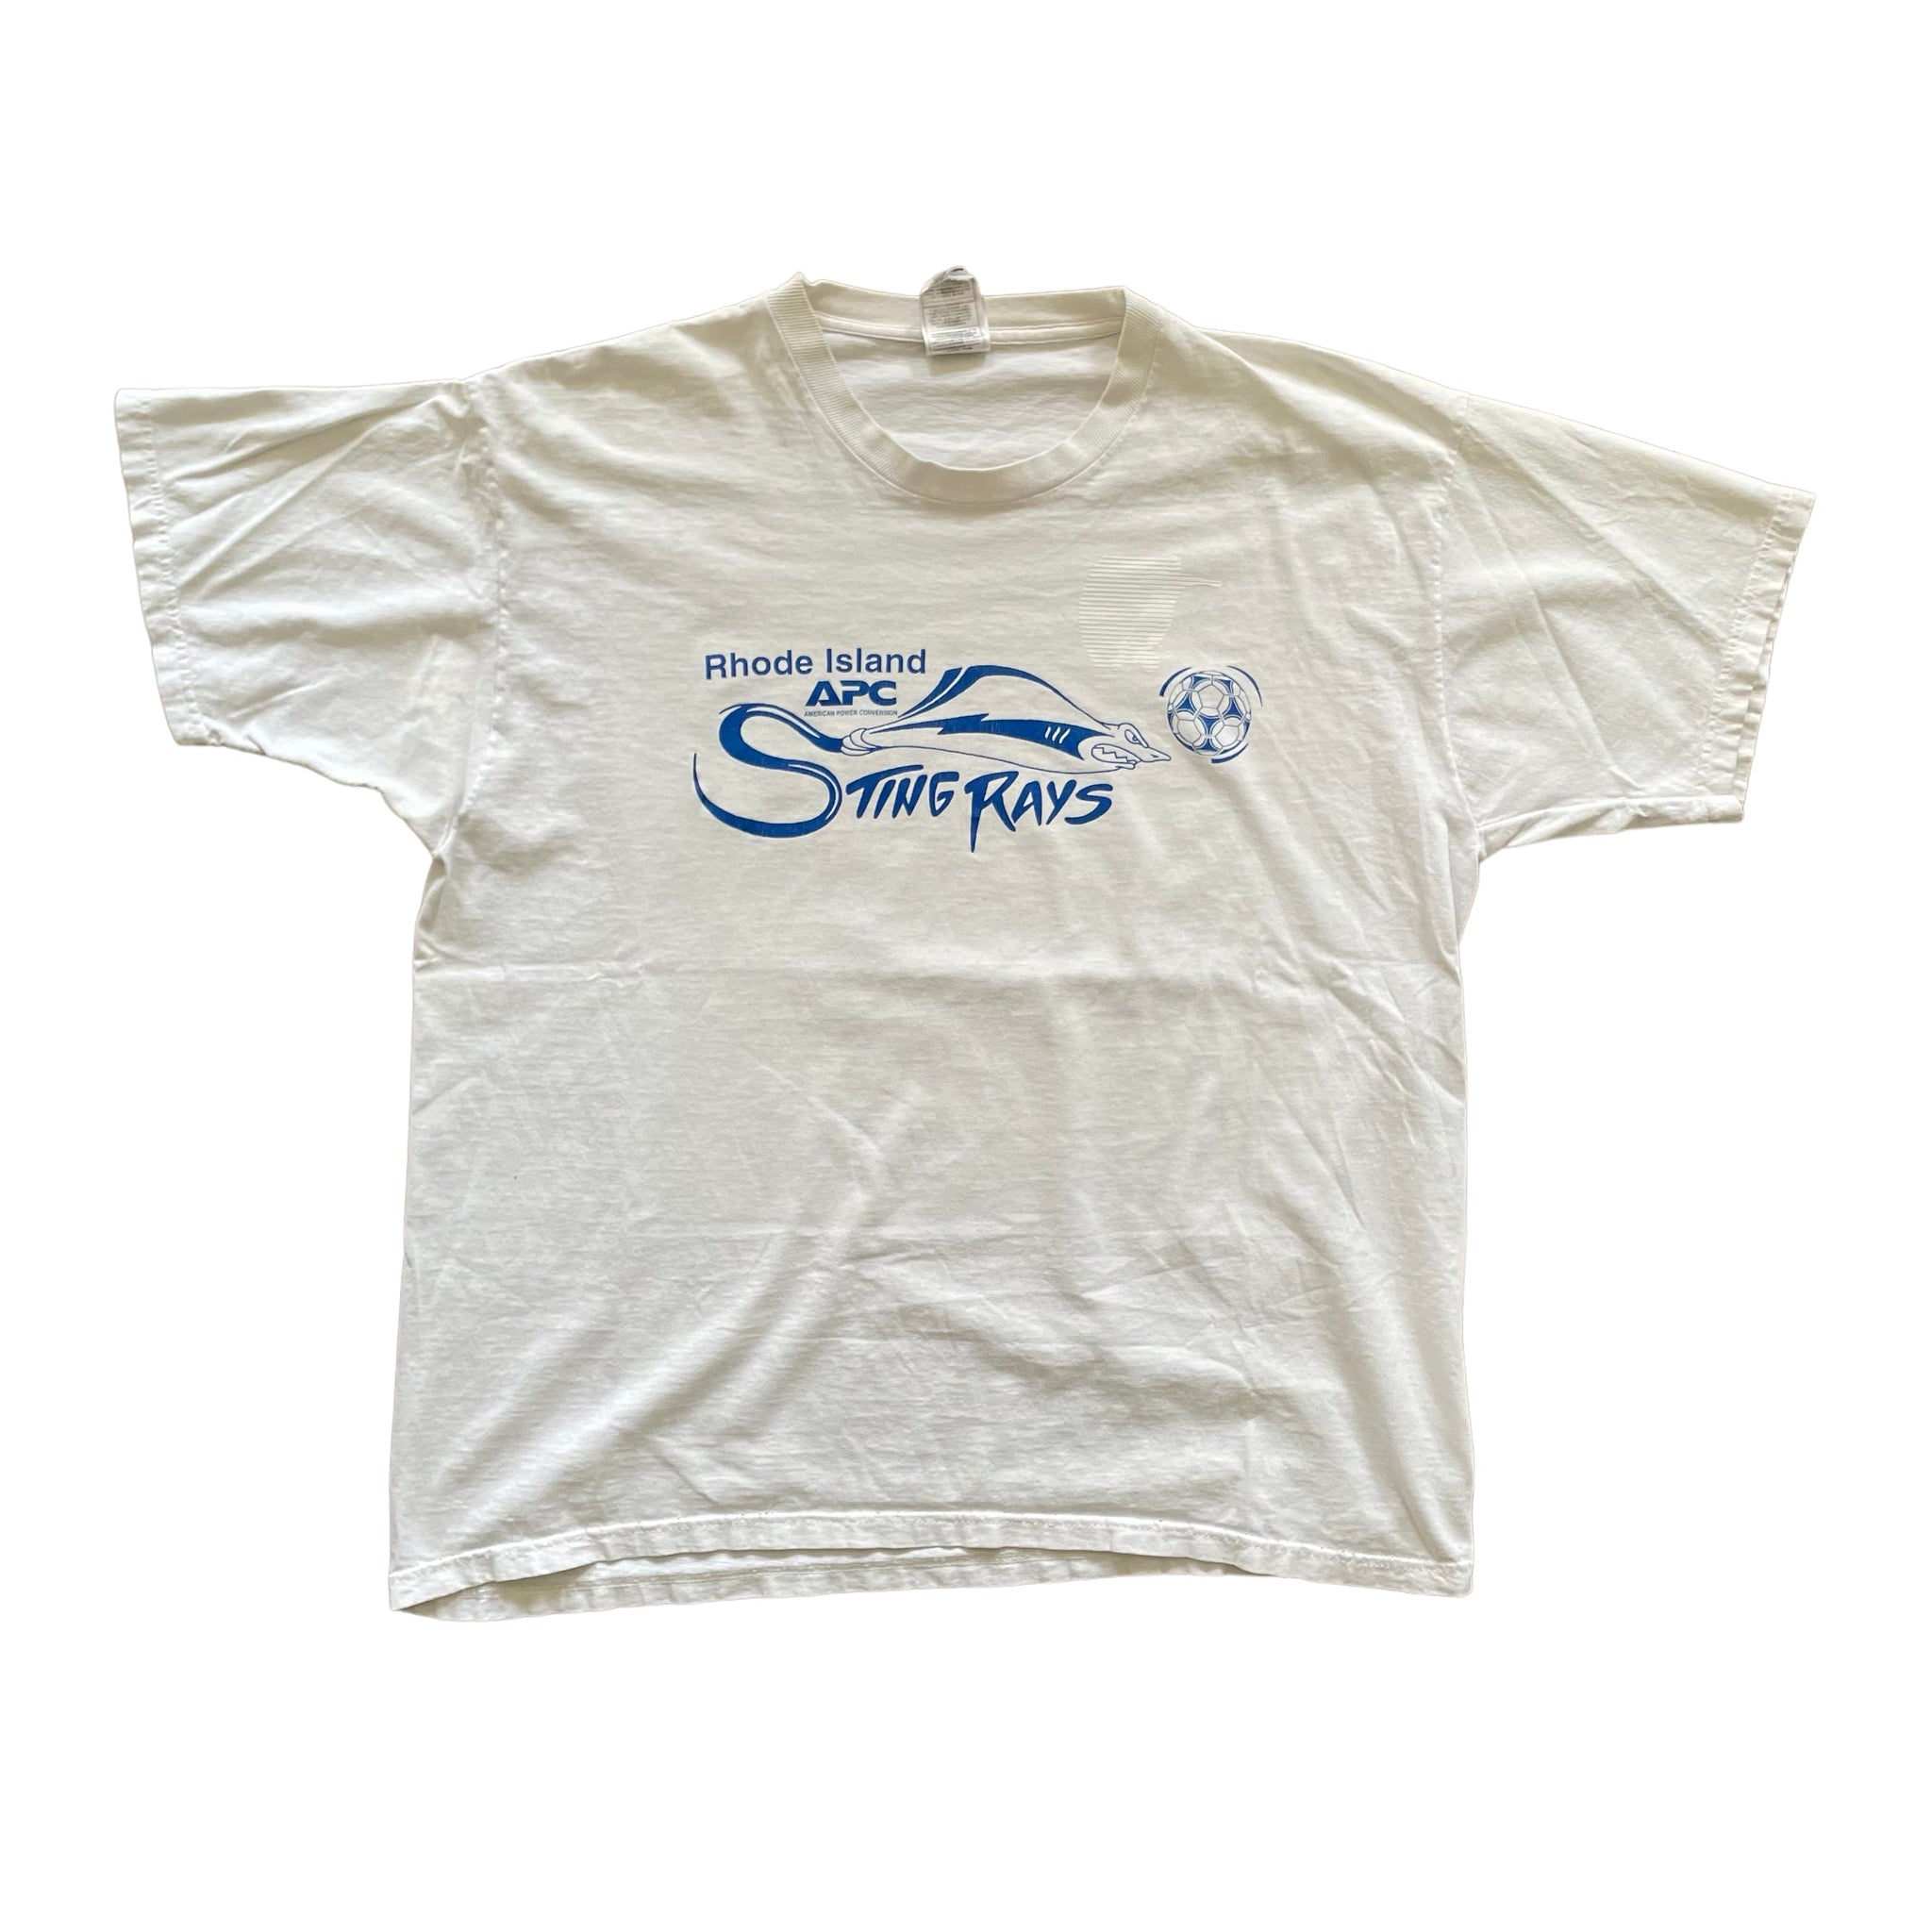 Rhode Island Stingrays Sponsor T-Shirt - L